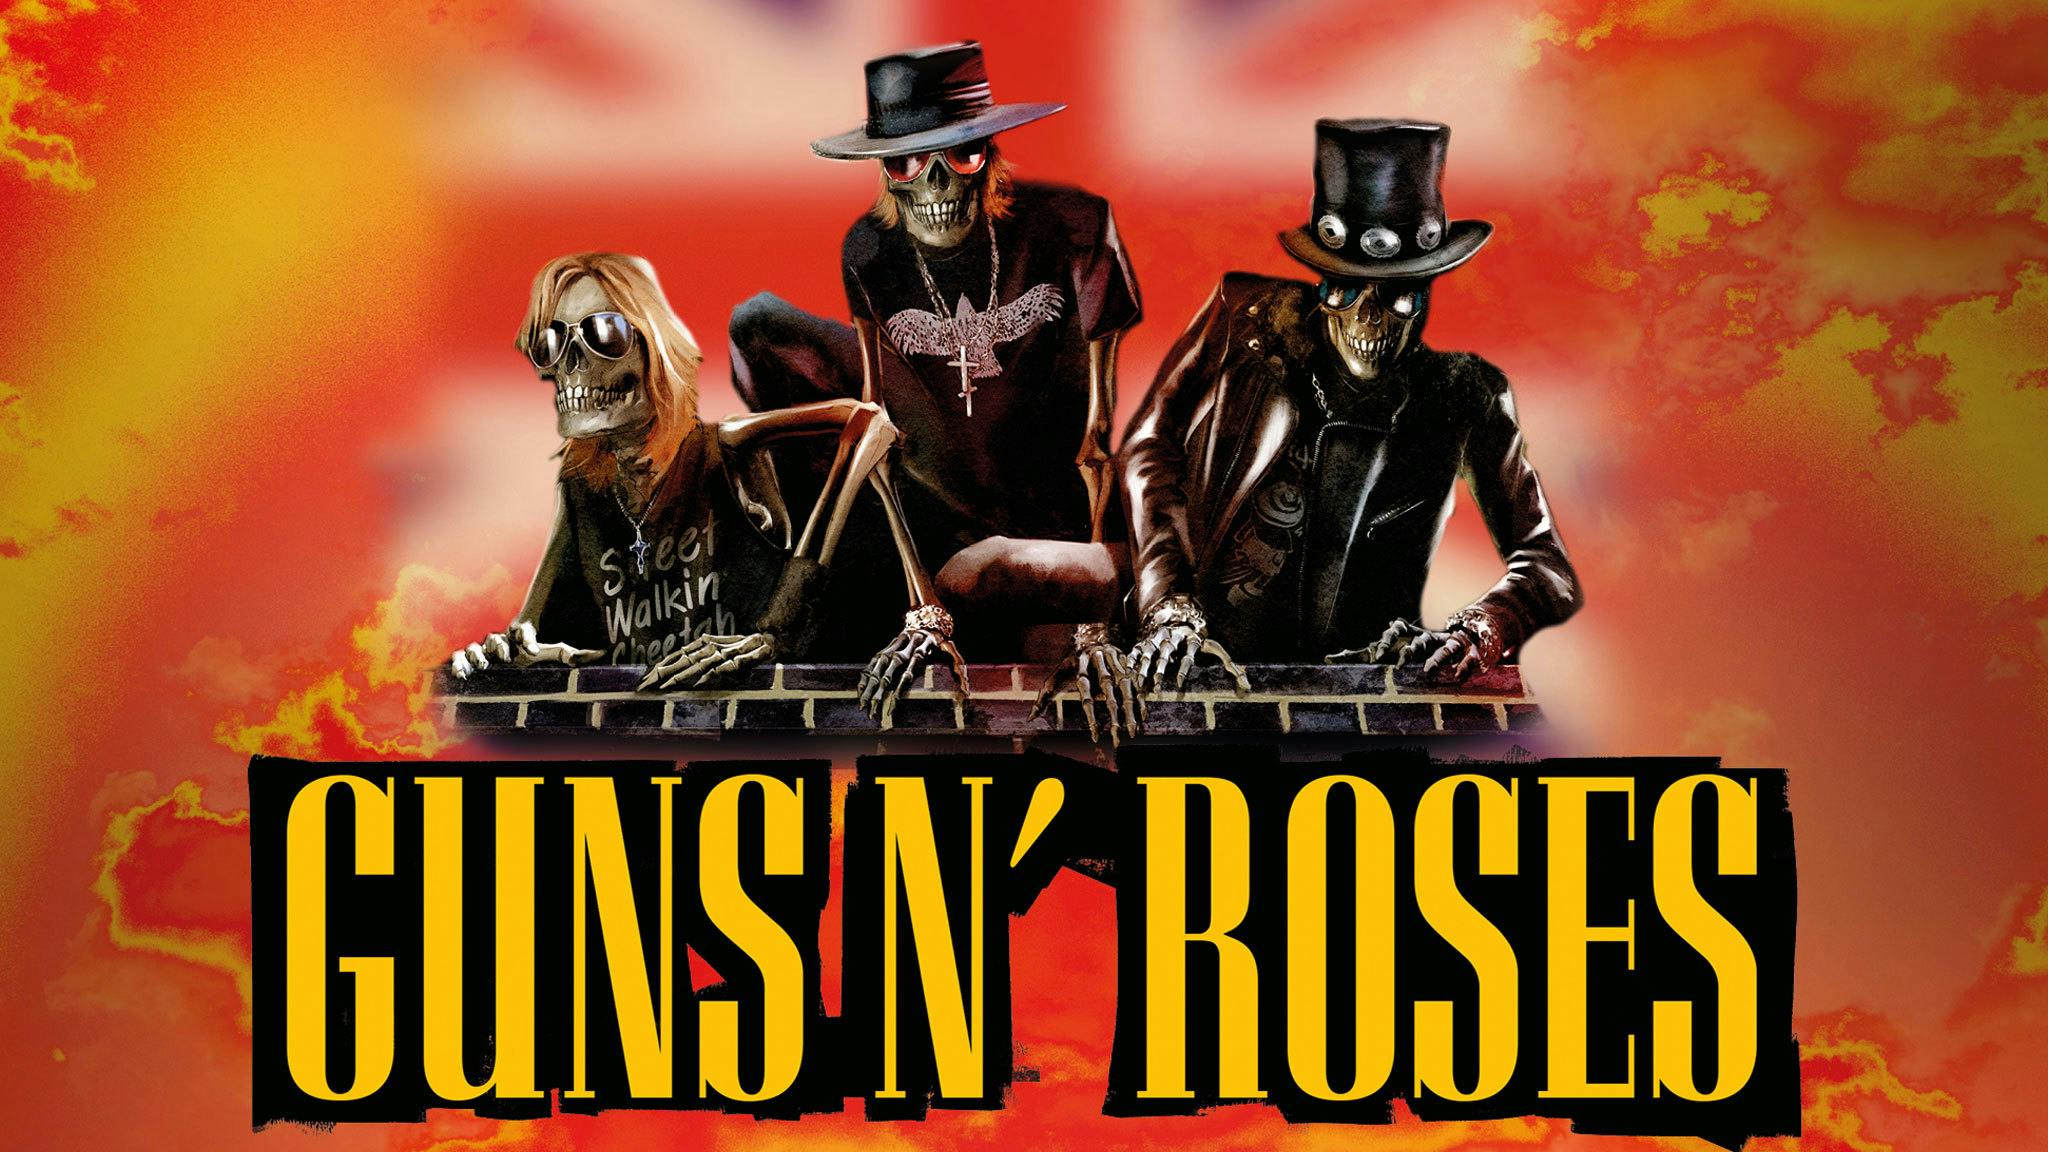 Guns N’ Roses to headline London’s BST Hyde Park in June 2023